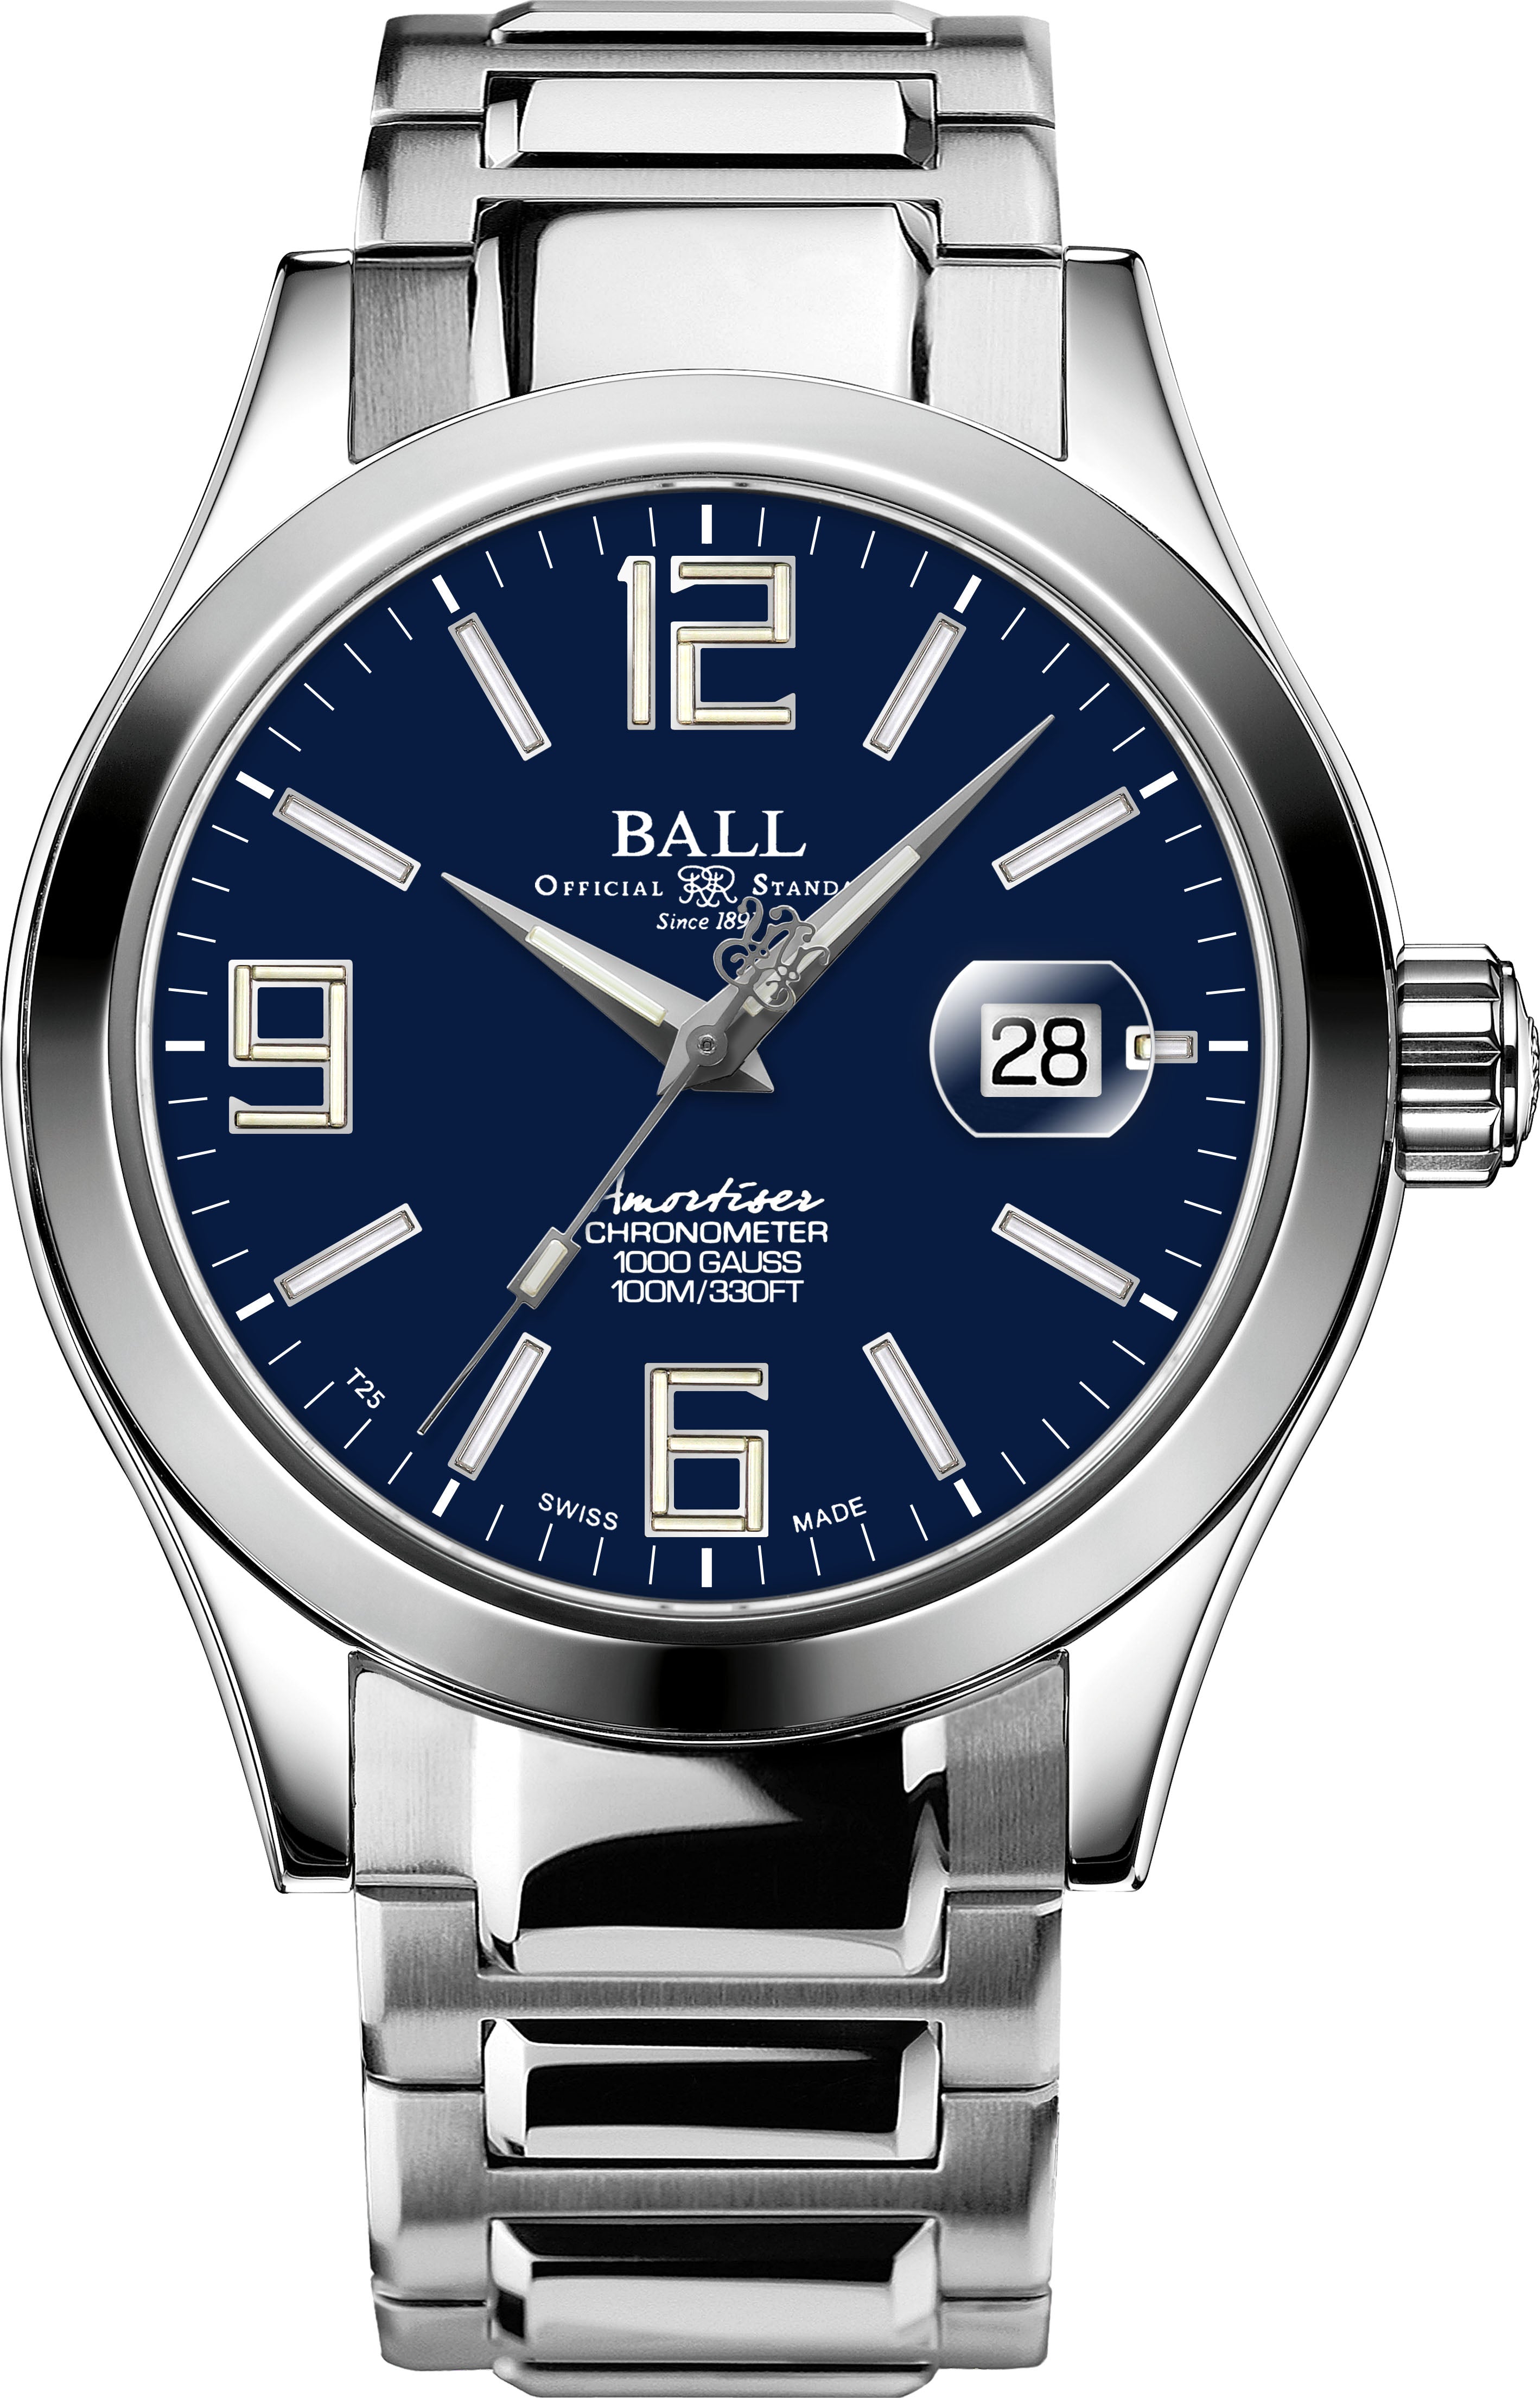 Photos - Wrist Watch Ball Watch Company Engineer III Pioneer II 43mm Limited Edition Pre-Order 